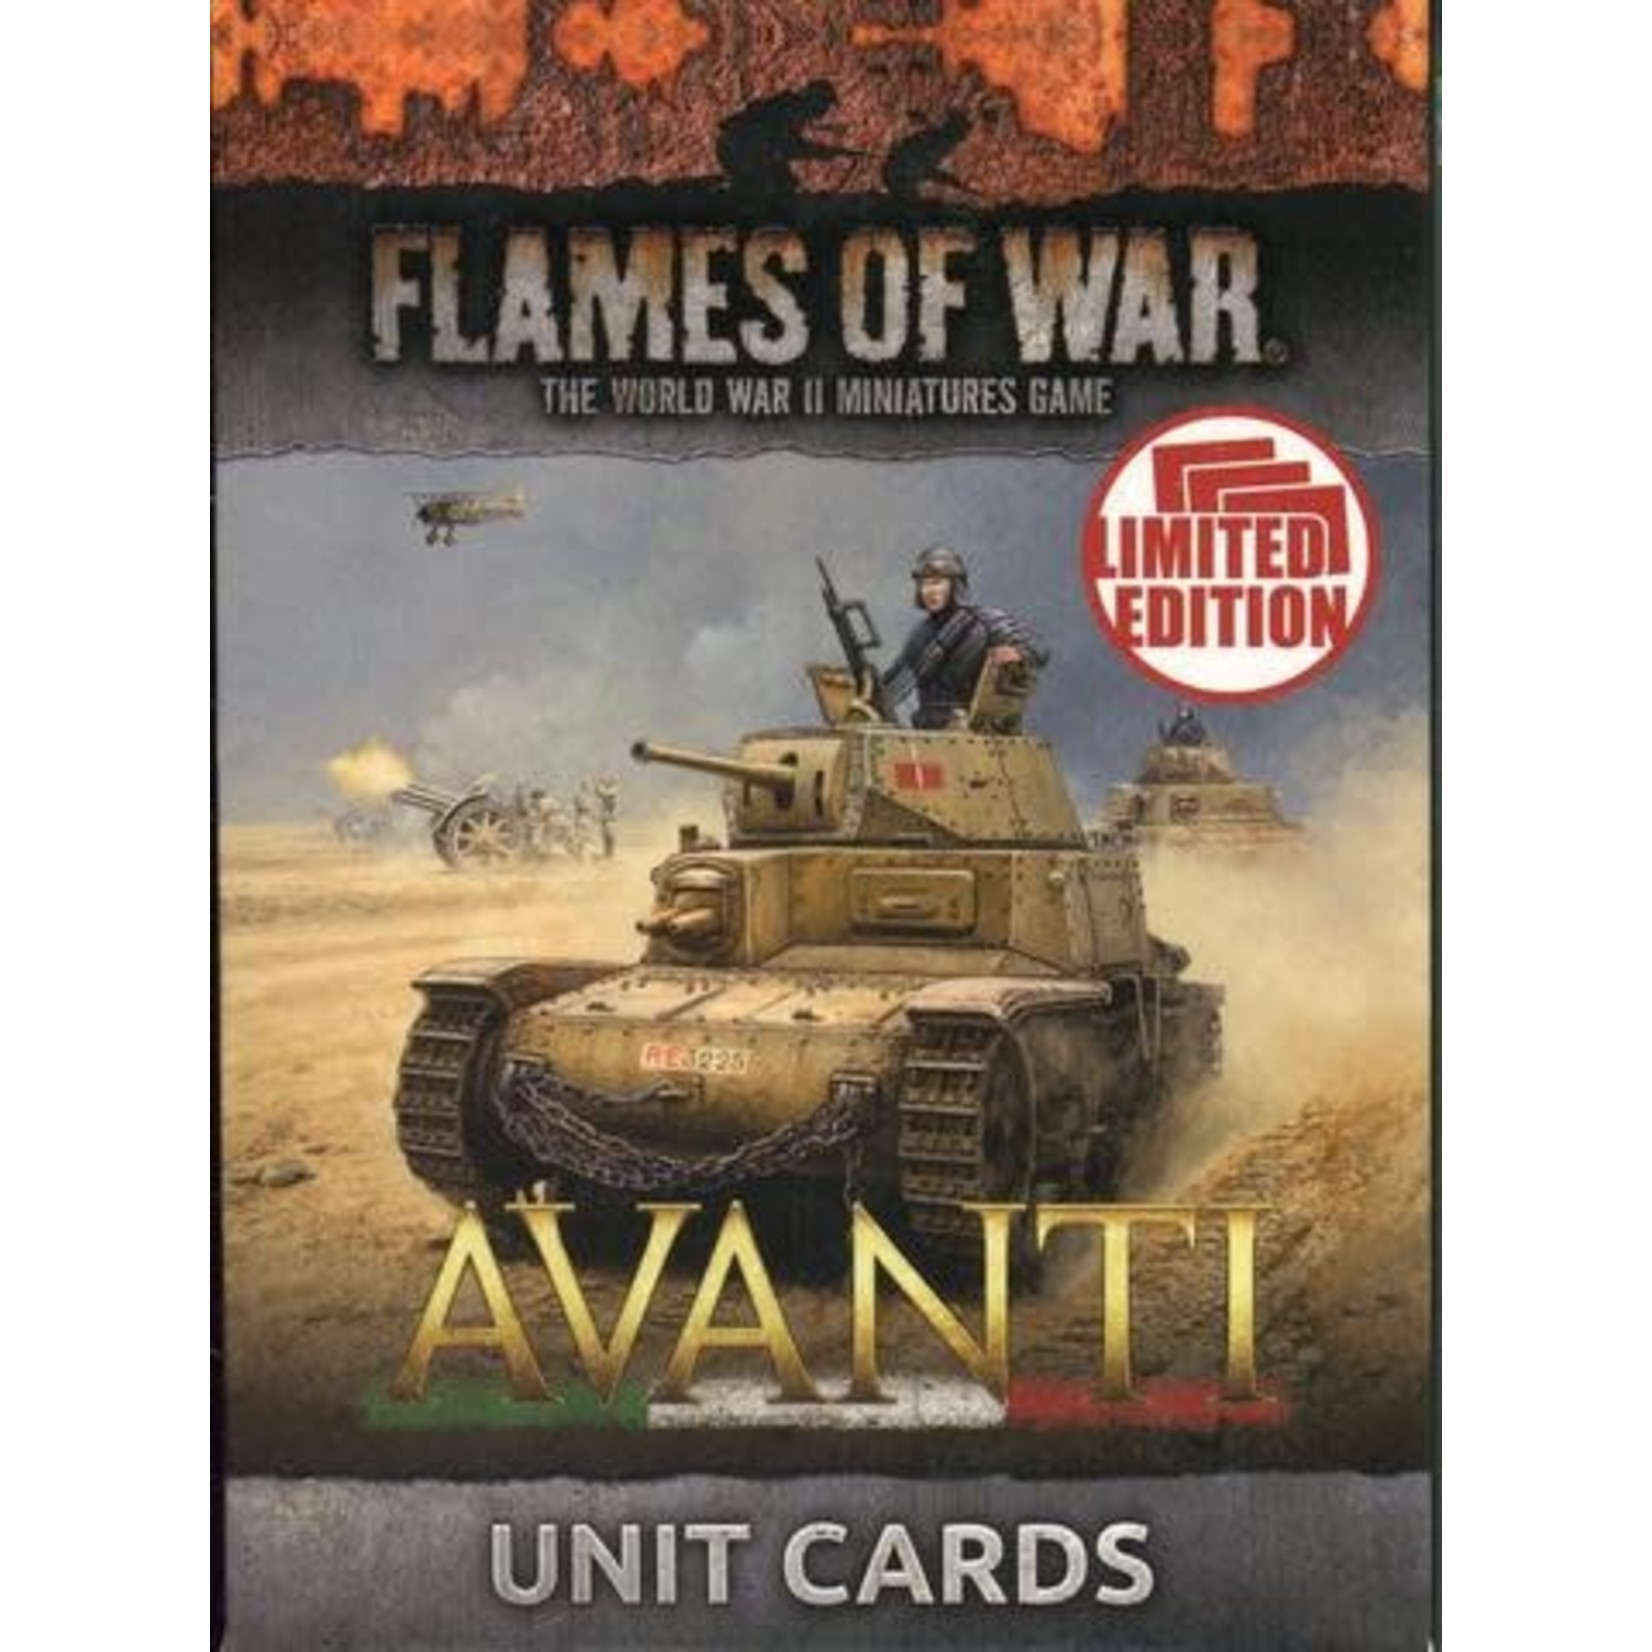 Battlefront Miniatures Avanti Unit Cards (Italian)